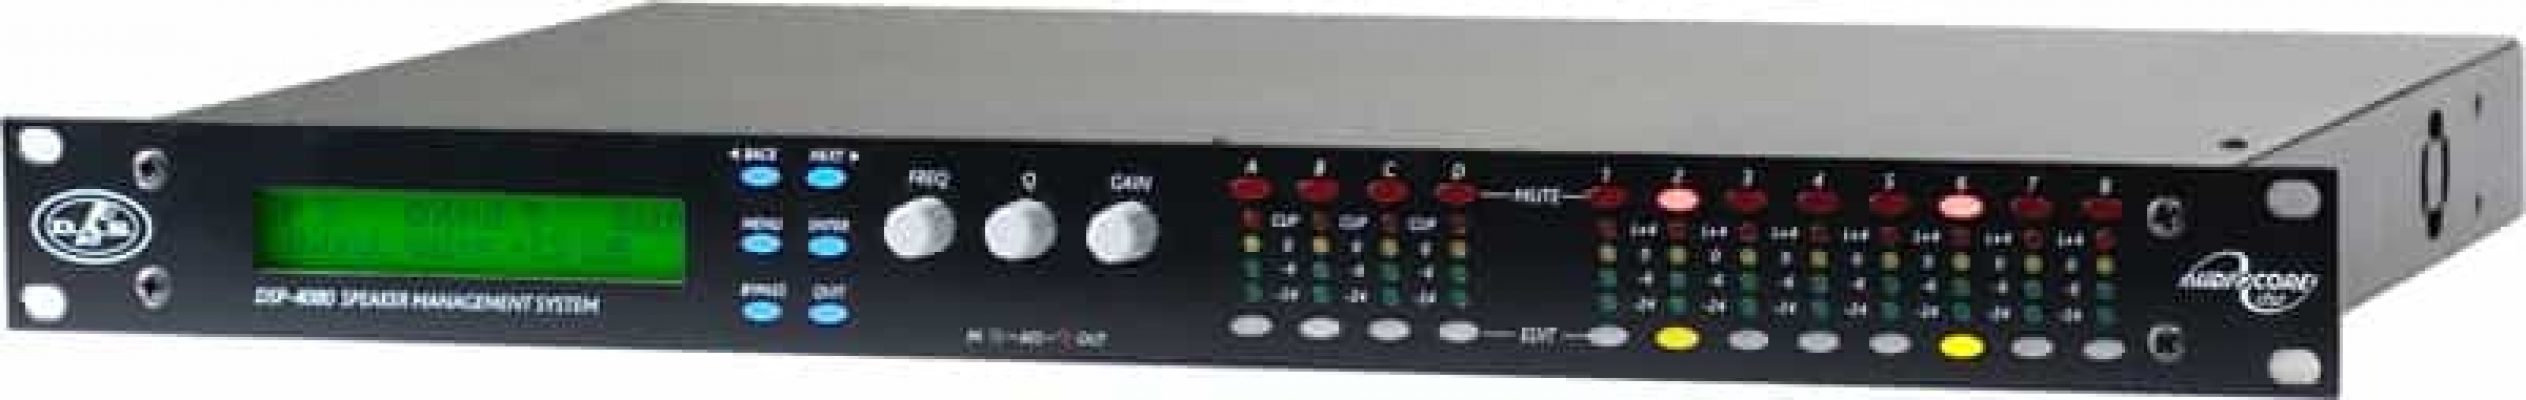 D.A.S. Audio DSP-4080